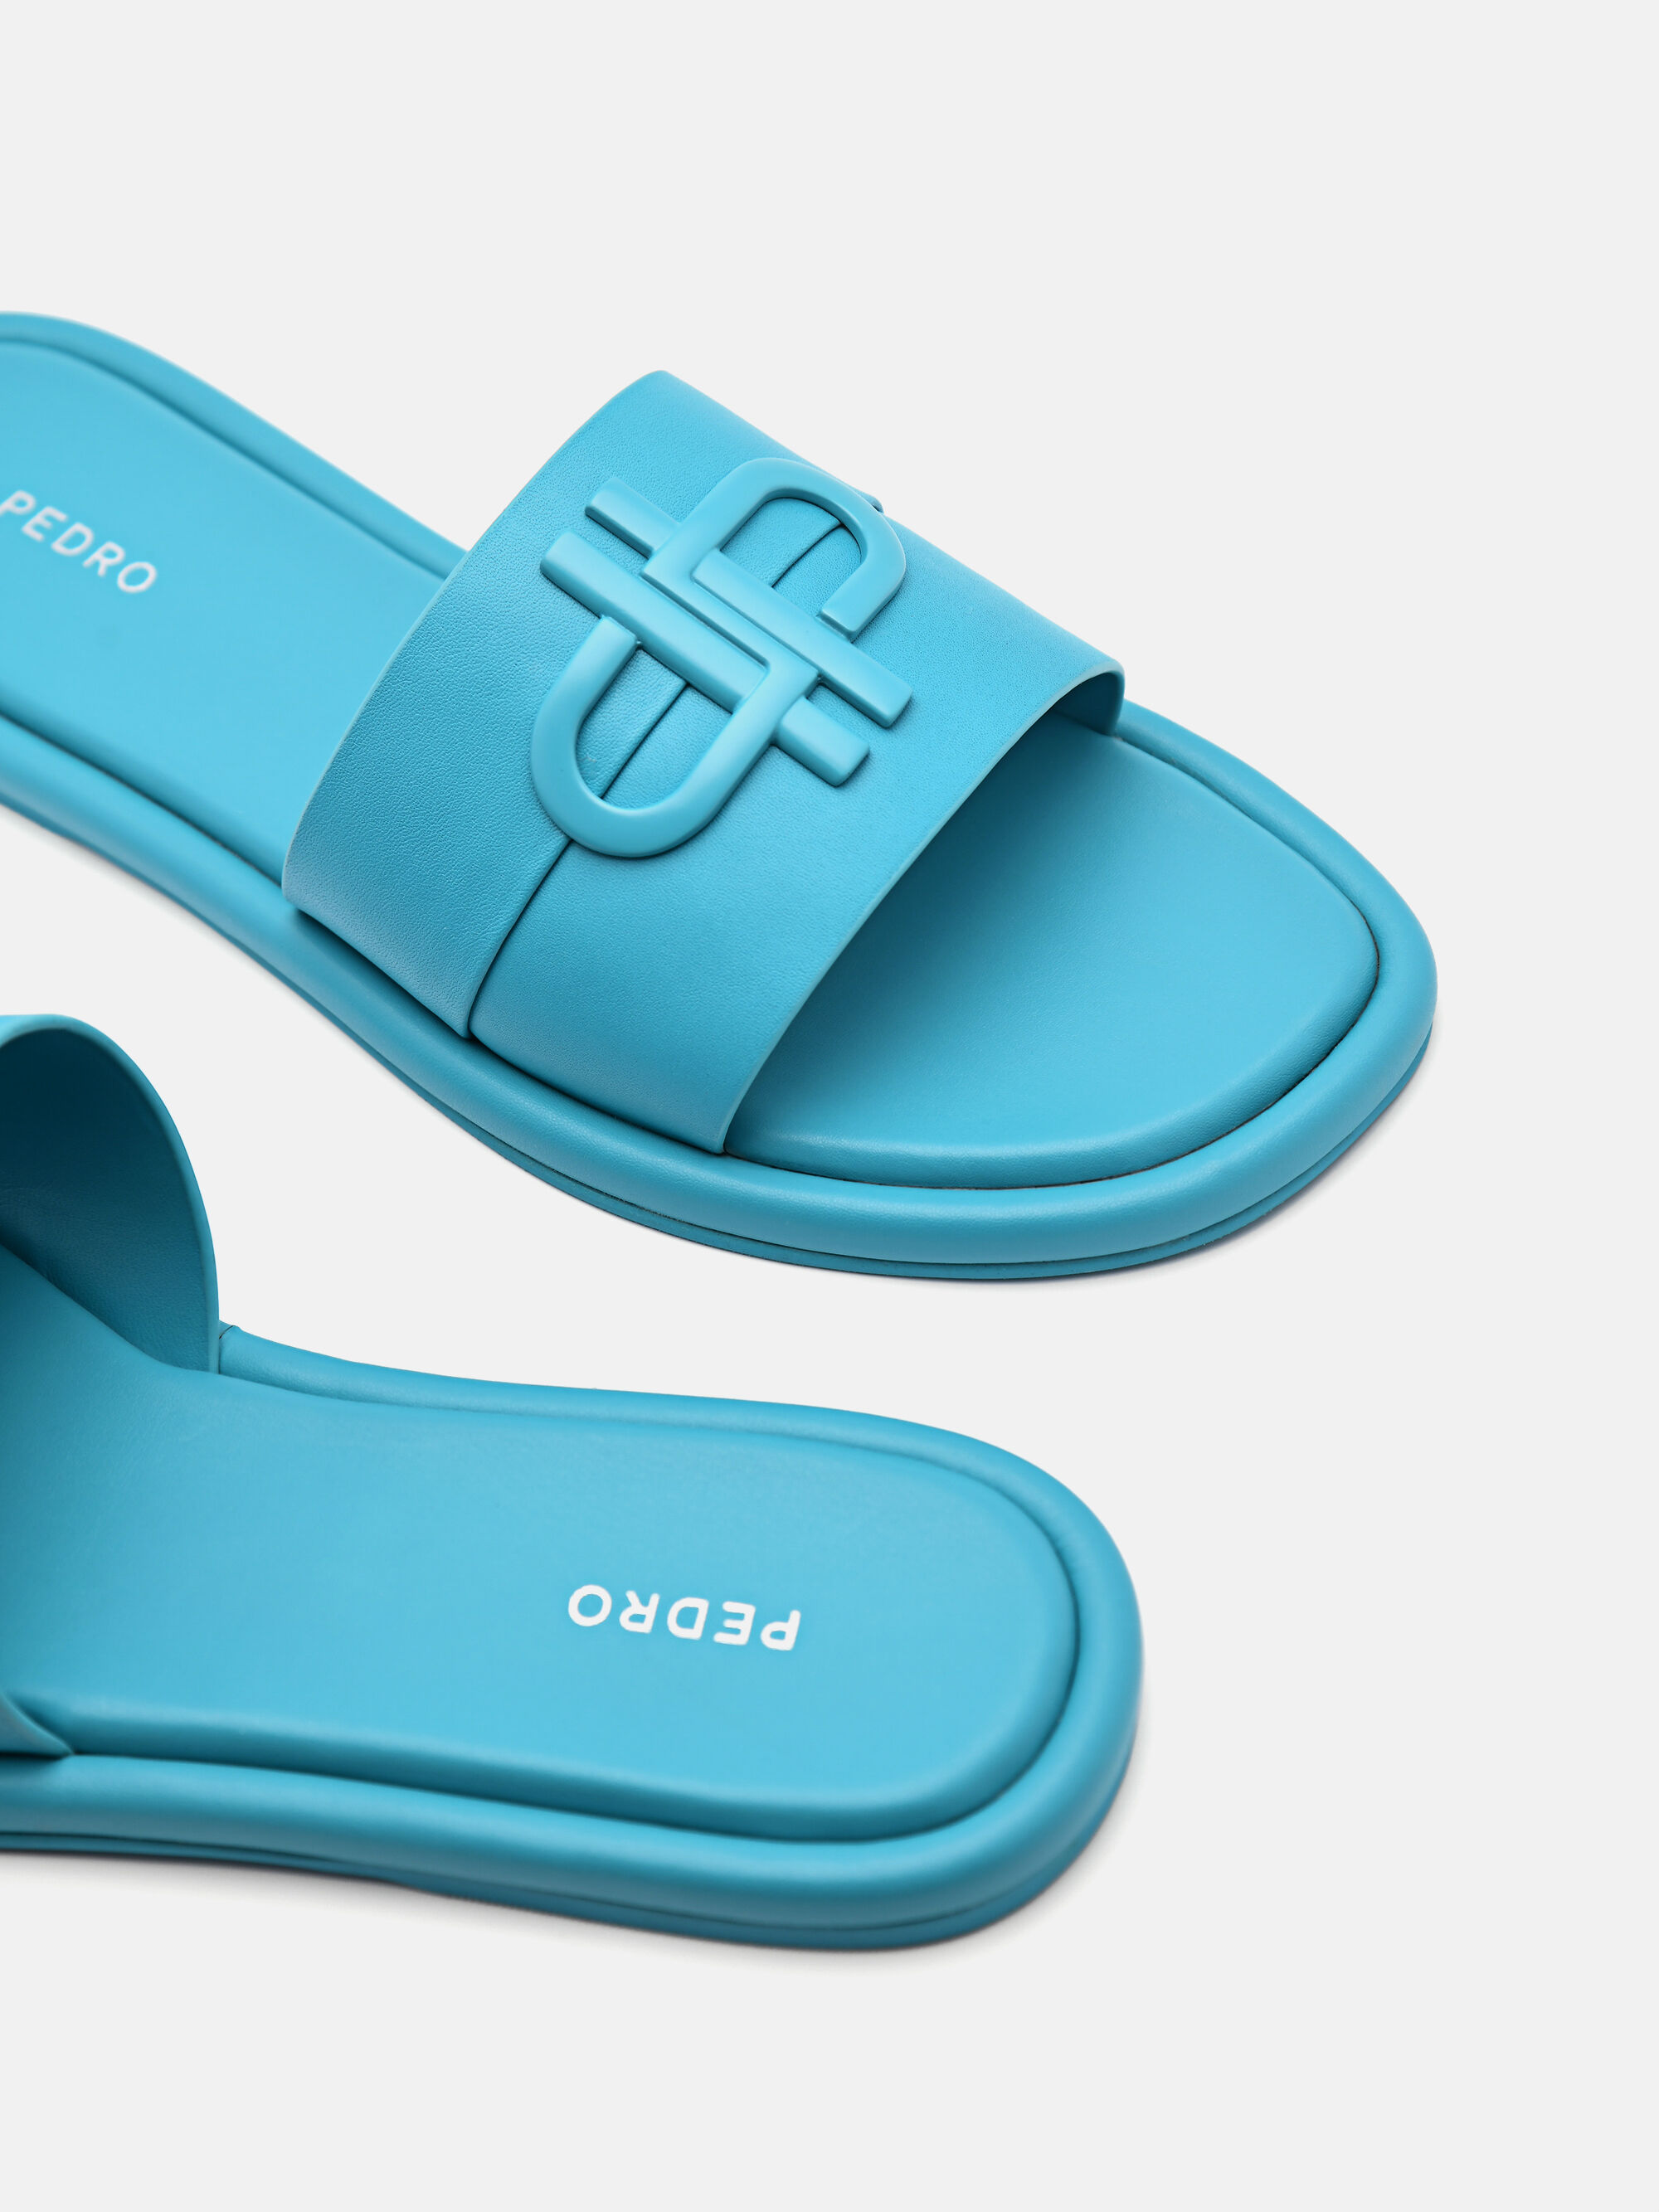 Cyan PEDRO Icon Leather Slide Sandals - PEDRO EU